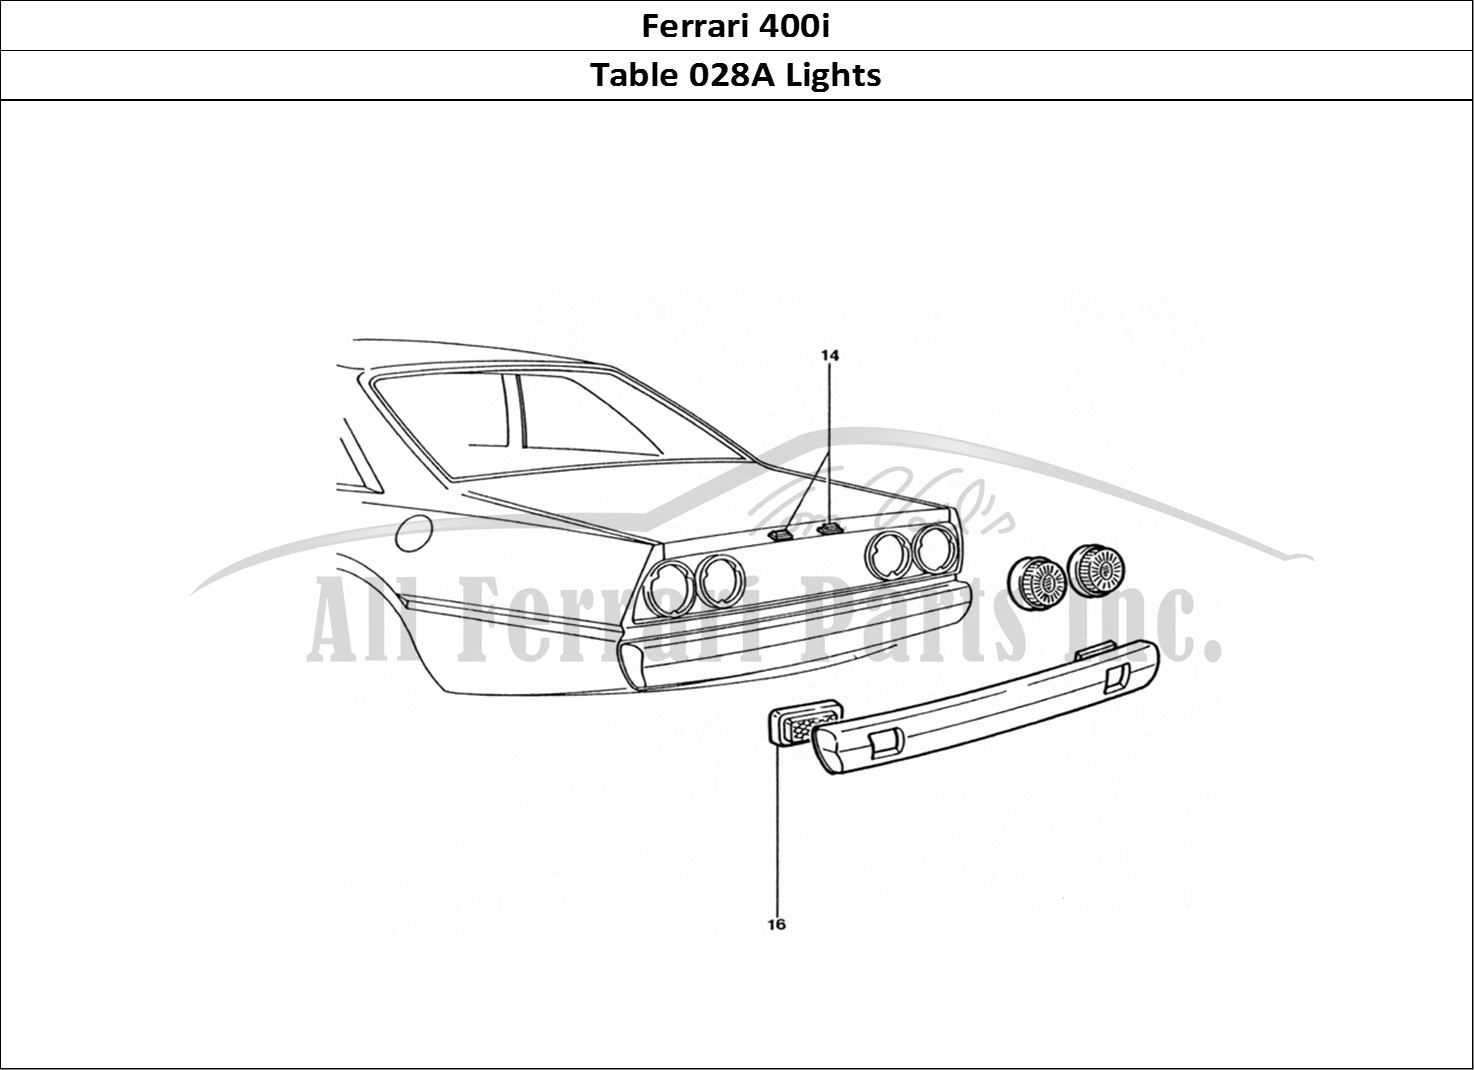 Ferrari Parts Ferrari 400 GT (Coachwork) Page 028 Rear lights (Variations)